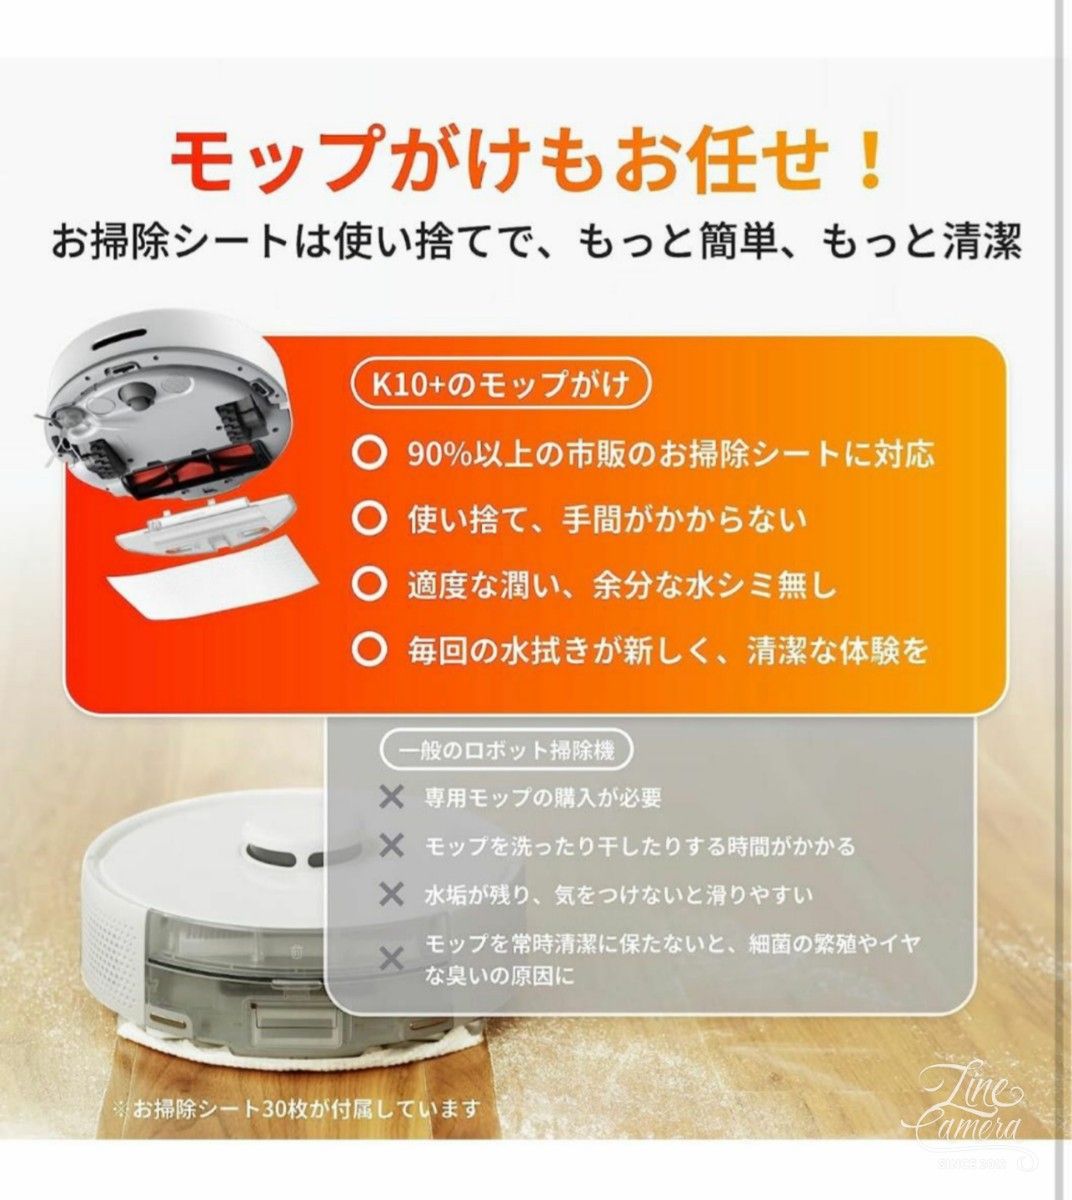 日本正規代理店 新品未開封品 SwitchBotロボット掃除機K10+ - 生活家電